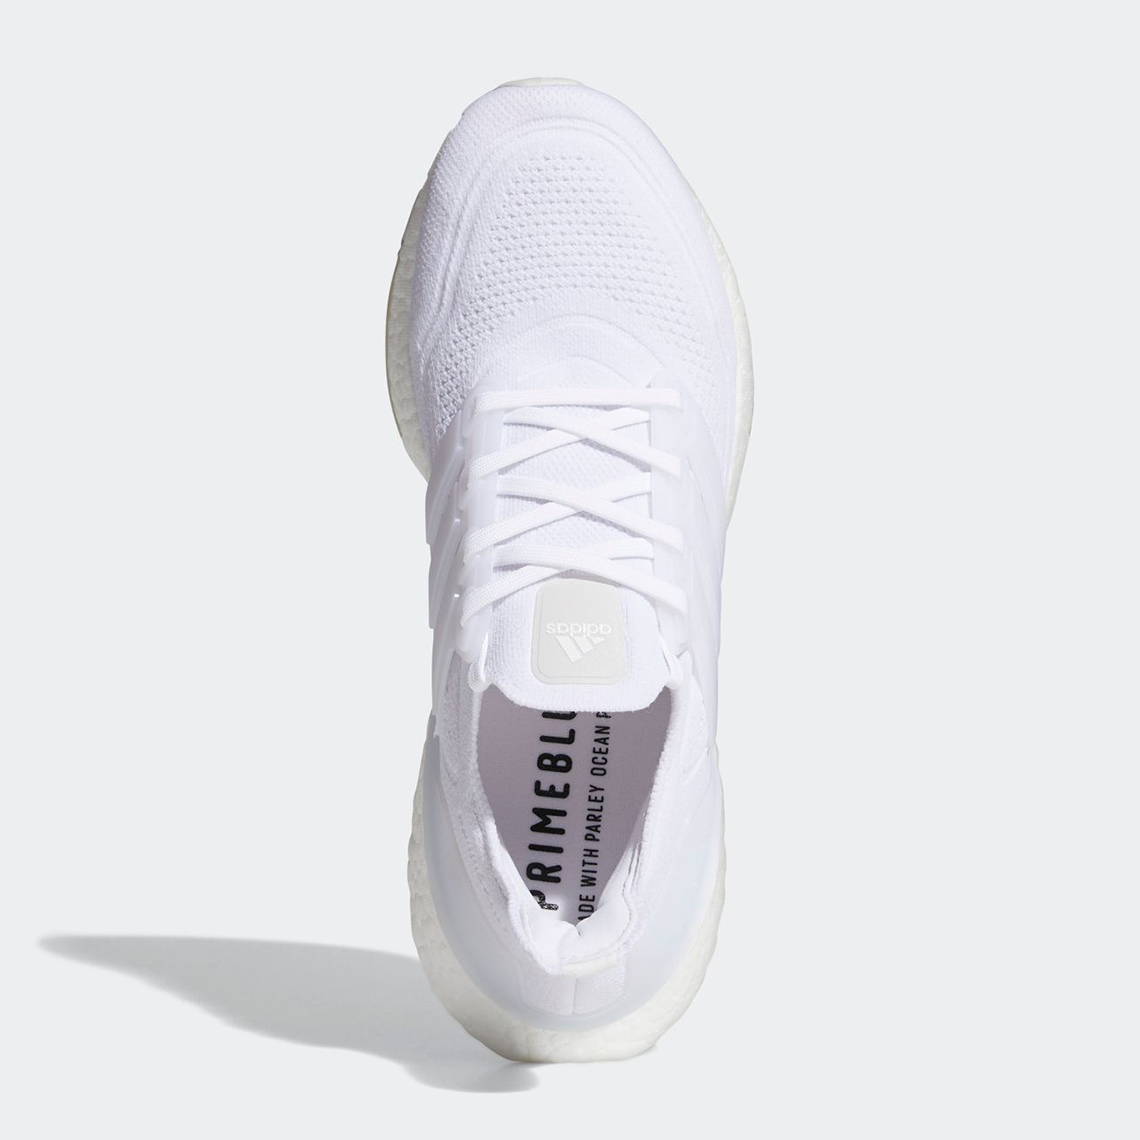 Adidas Ultraboost 21 Triple White Fy0379 Fy0403 Release Date Sneakernews Com